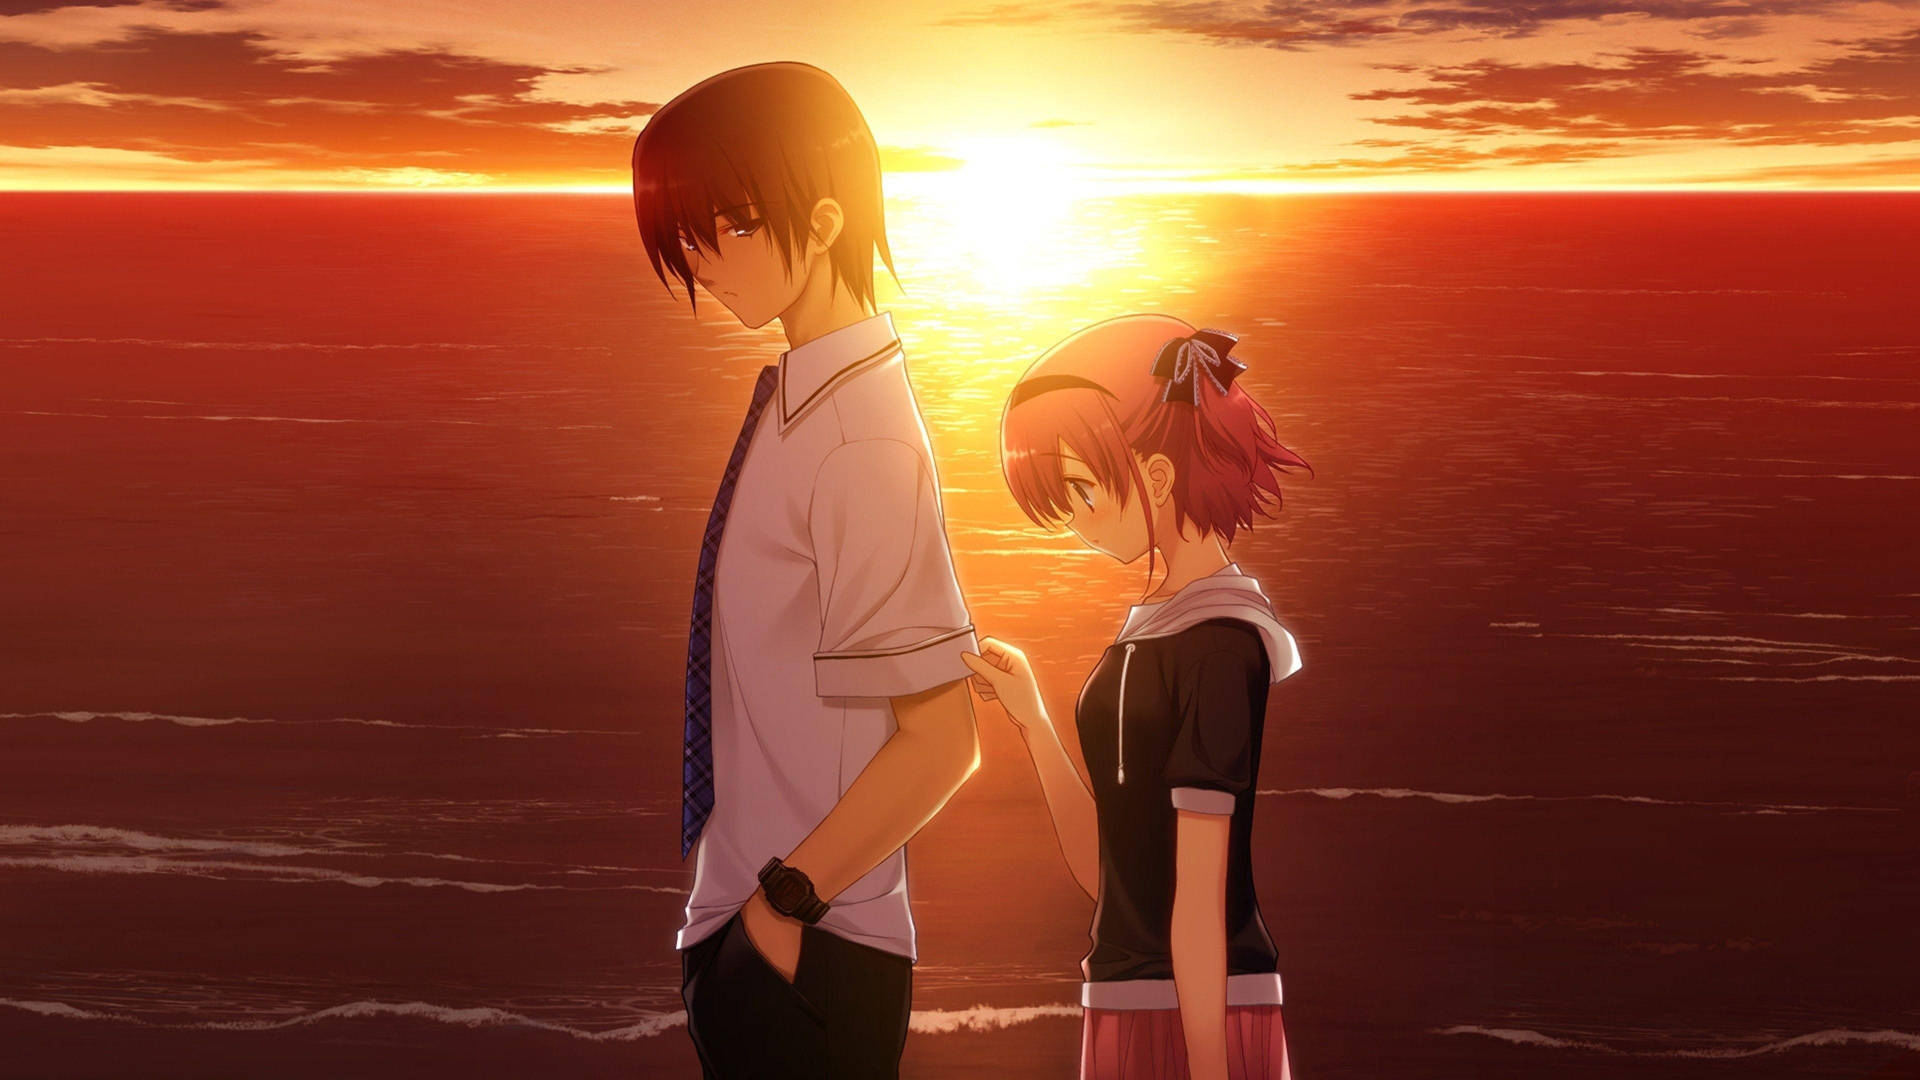 Sad Anime Boy In Sunset Wallpaper